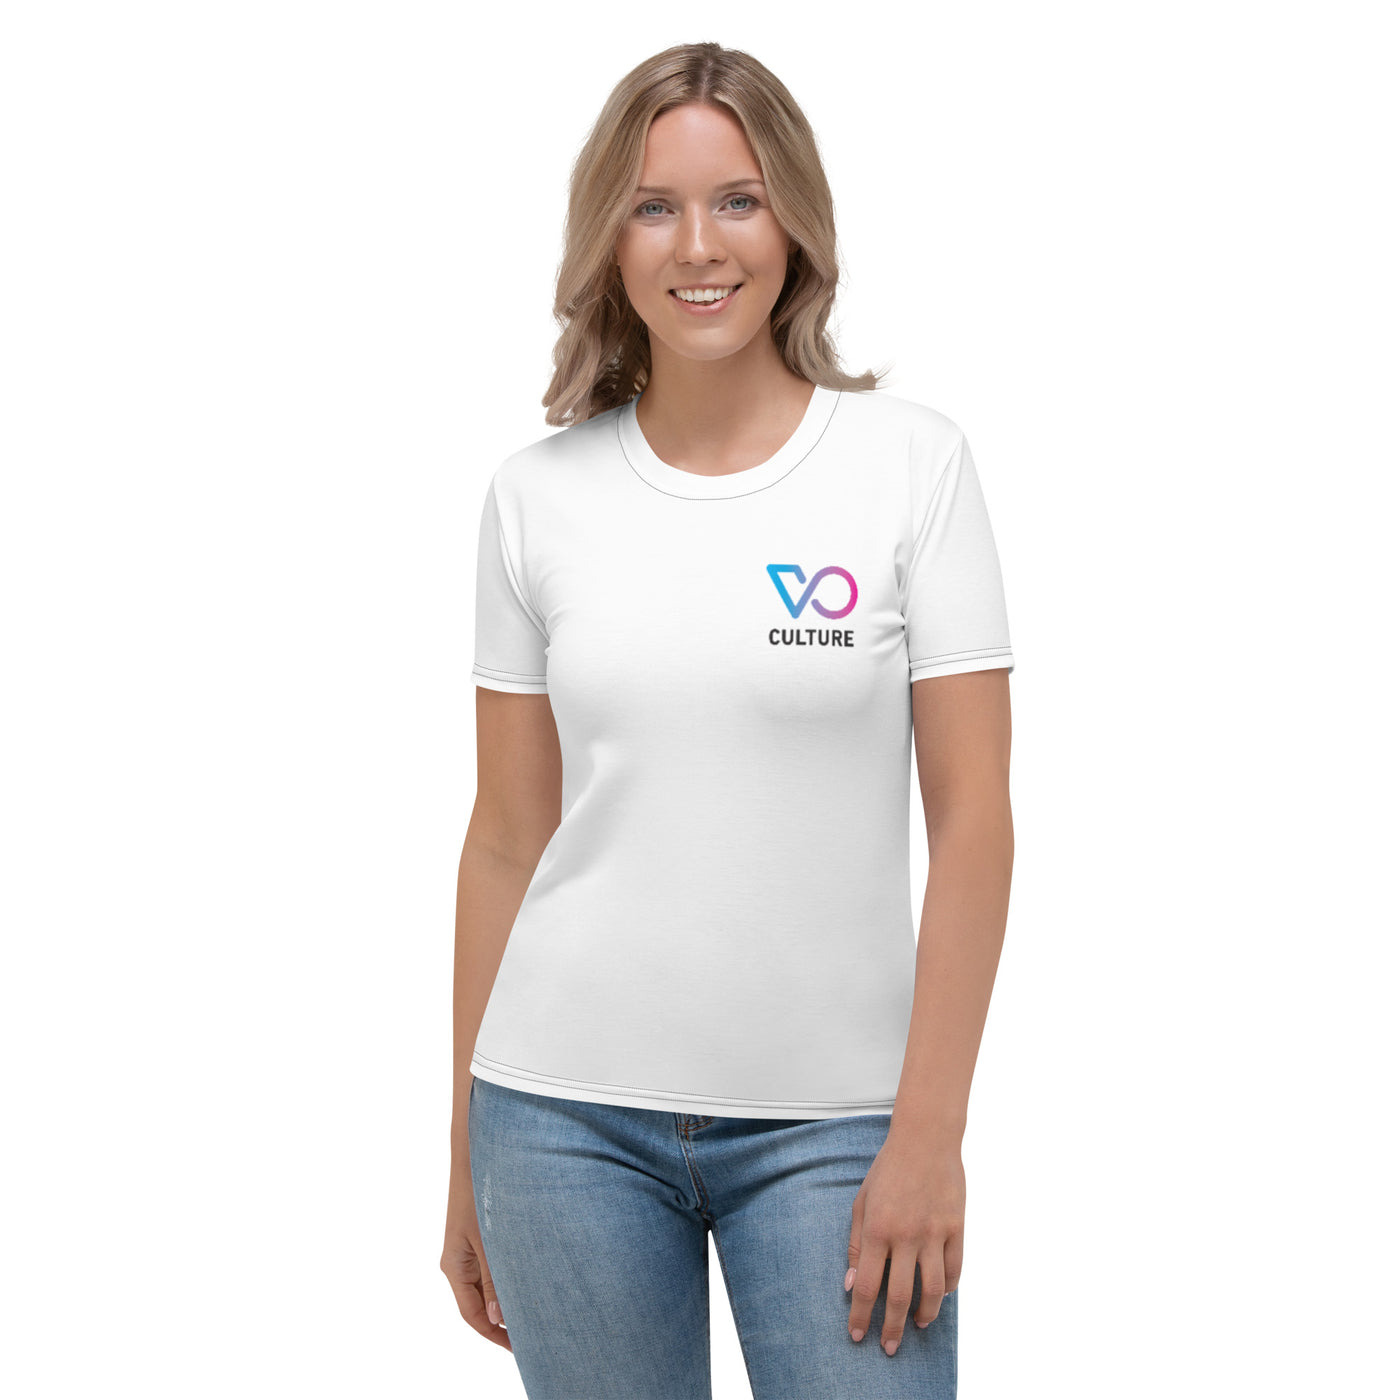 VO CULTURE Women's T-shirt